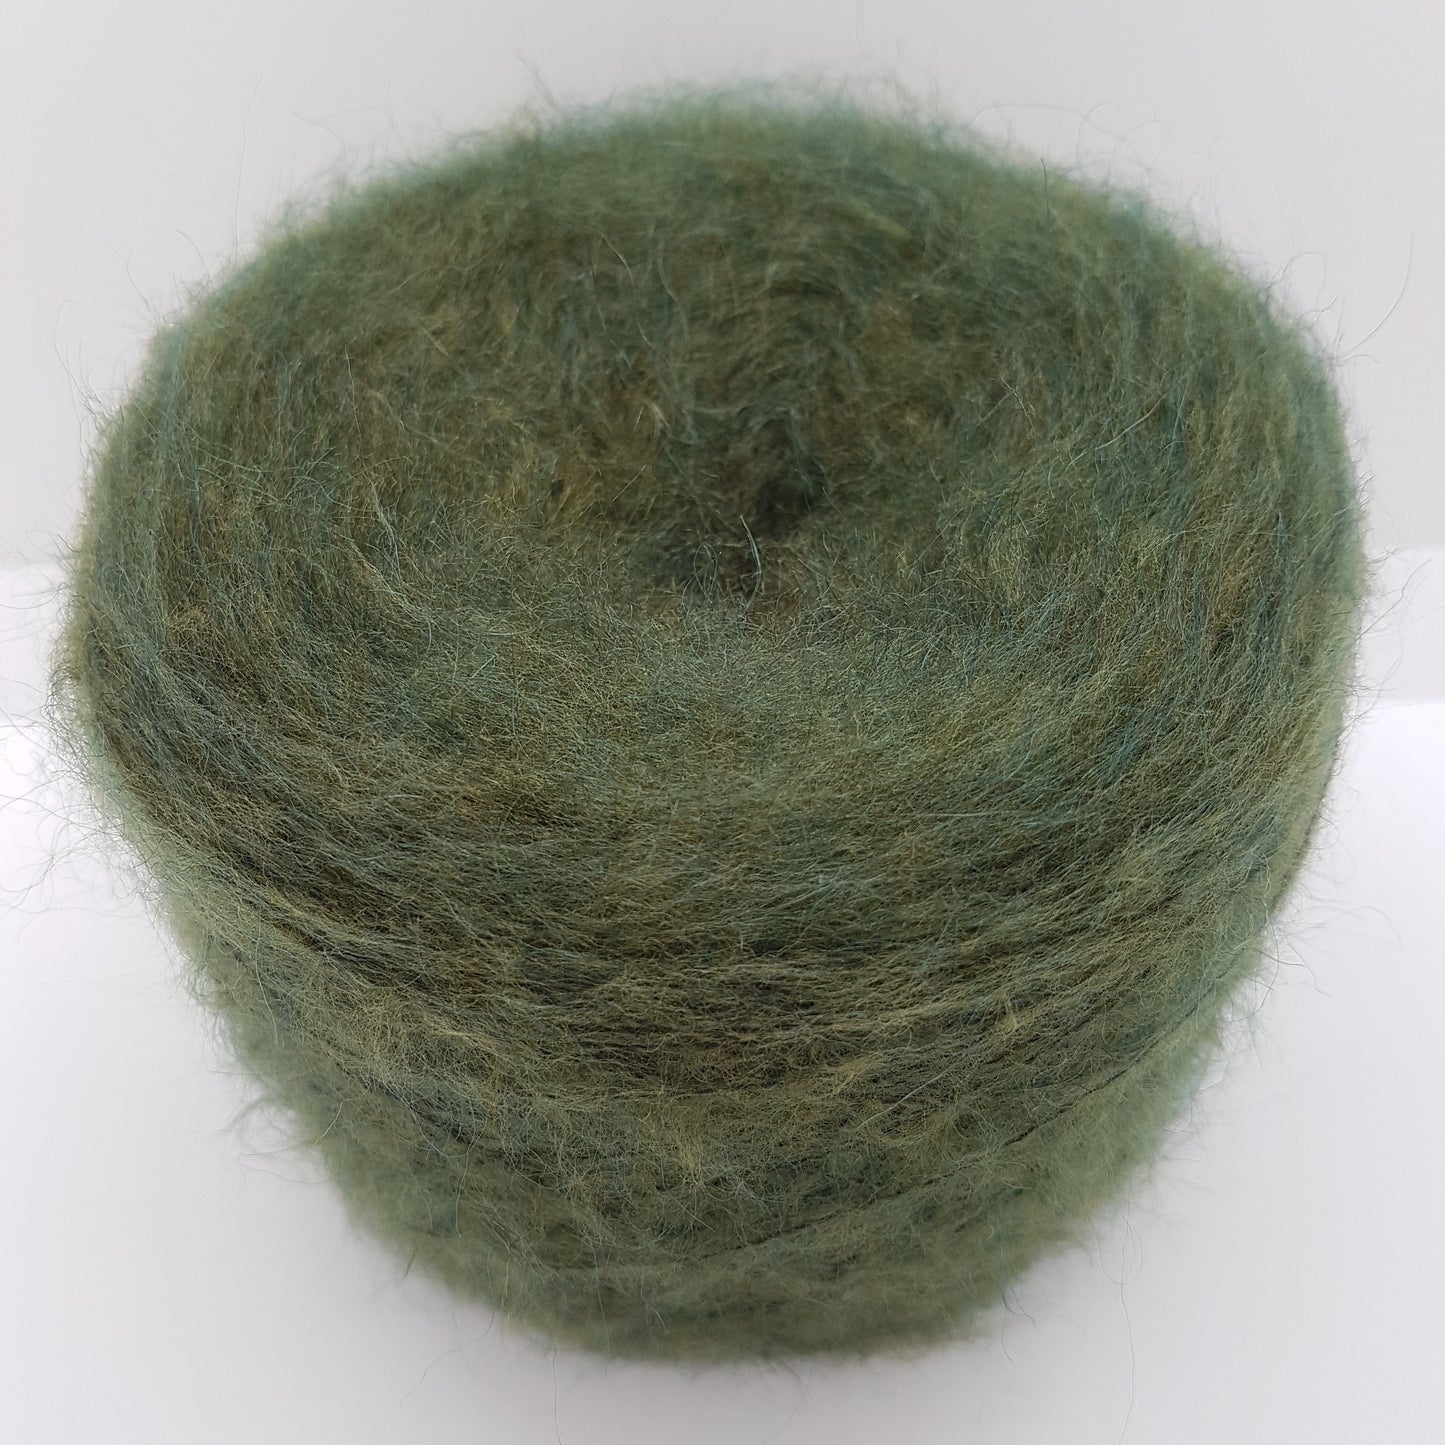 100g Mohair Italian yarn green military olive color N.283